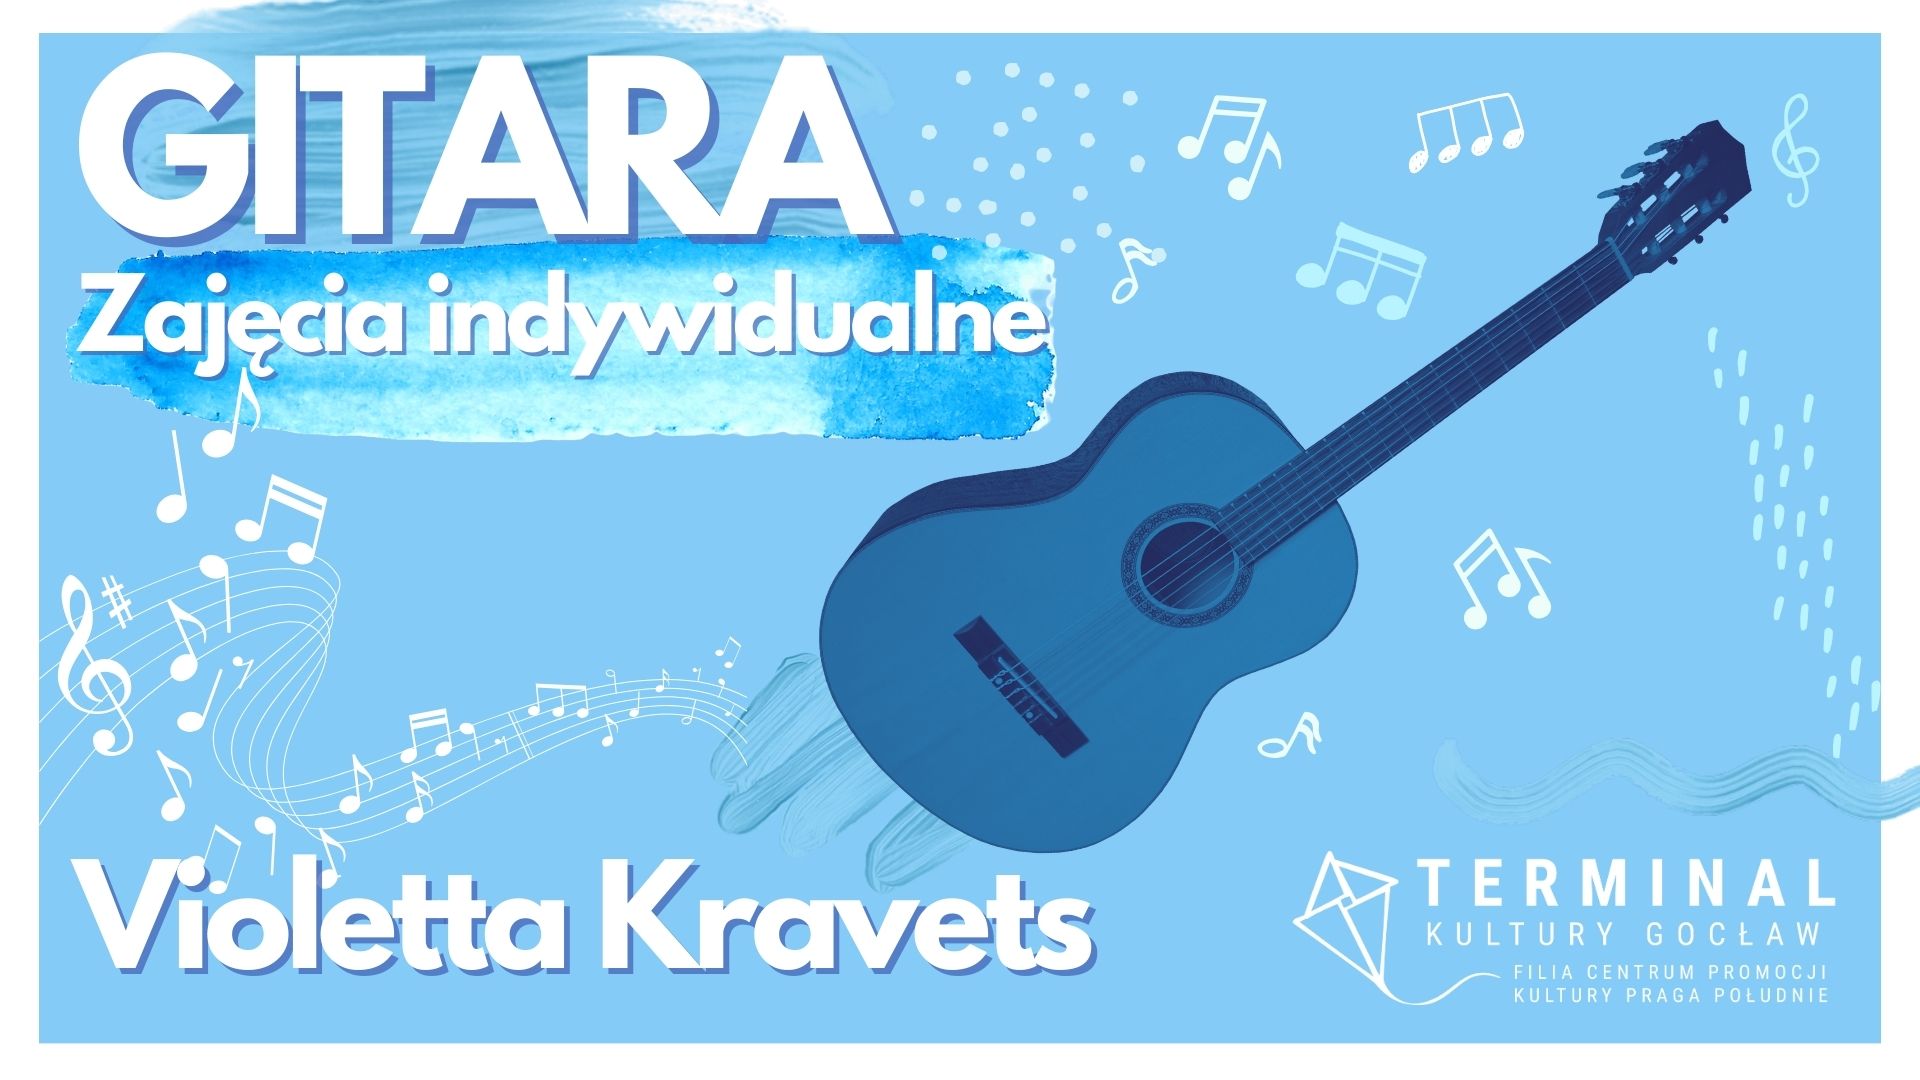 Gitara zajęcia indywidualne Violetta Kravets